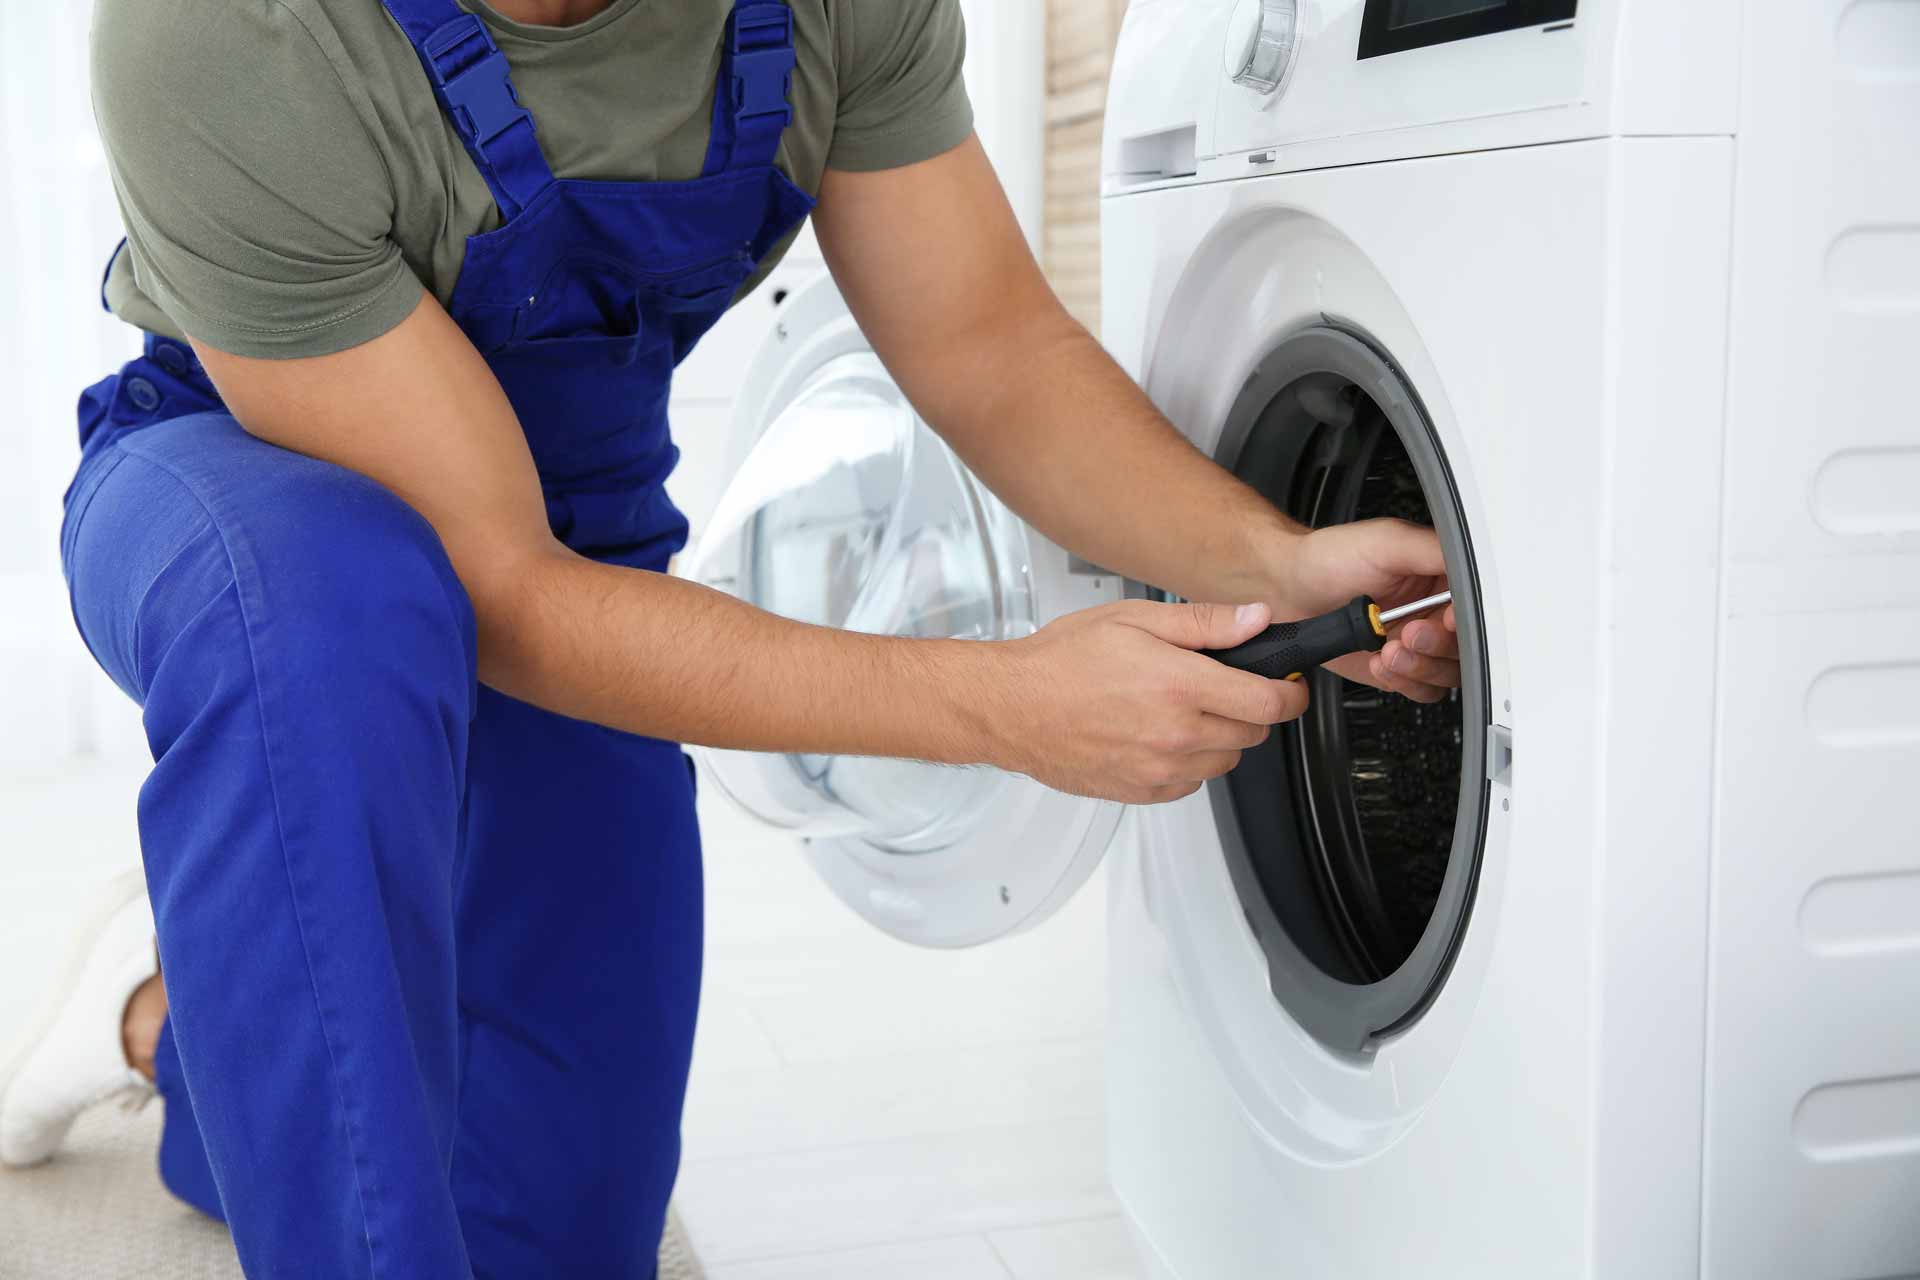 Appliance repair technician repairing a washer/dryer